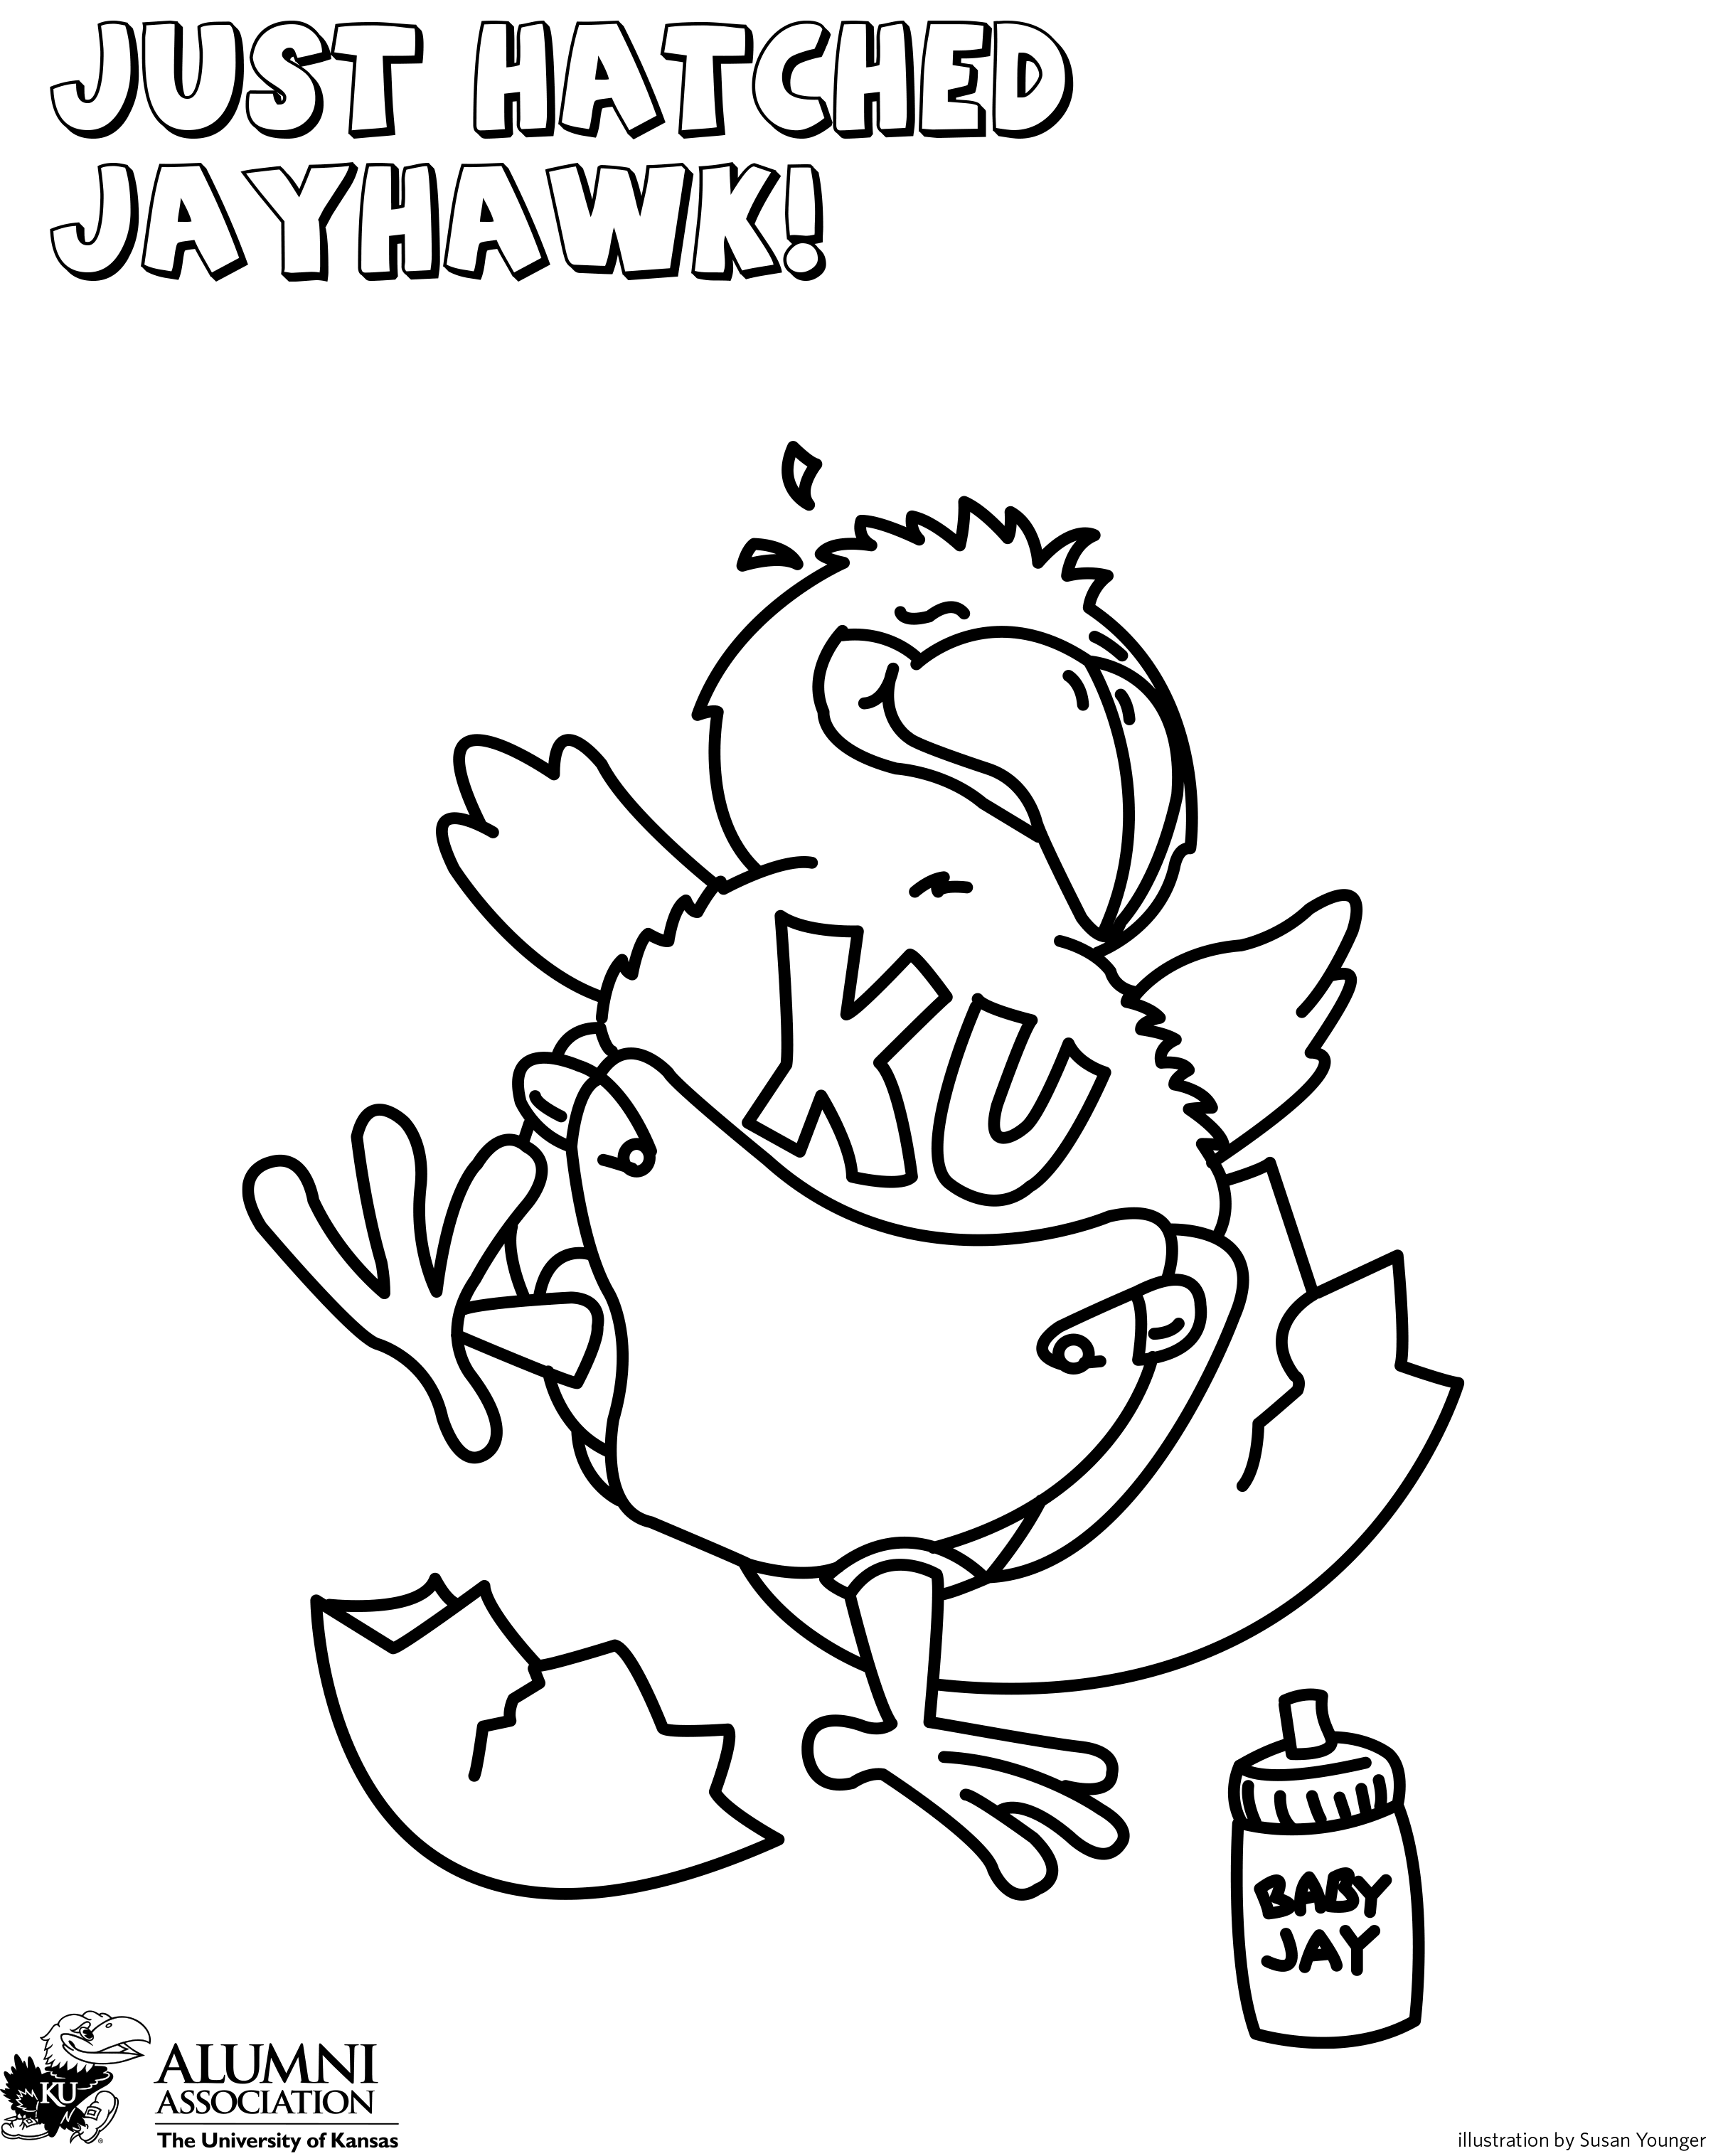 Just Hatched Jayhawk - KU coloring page.